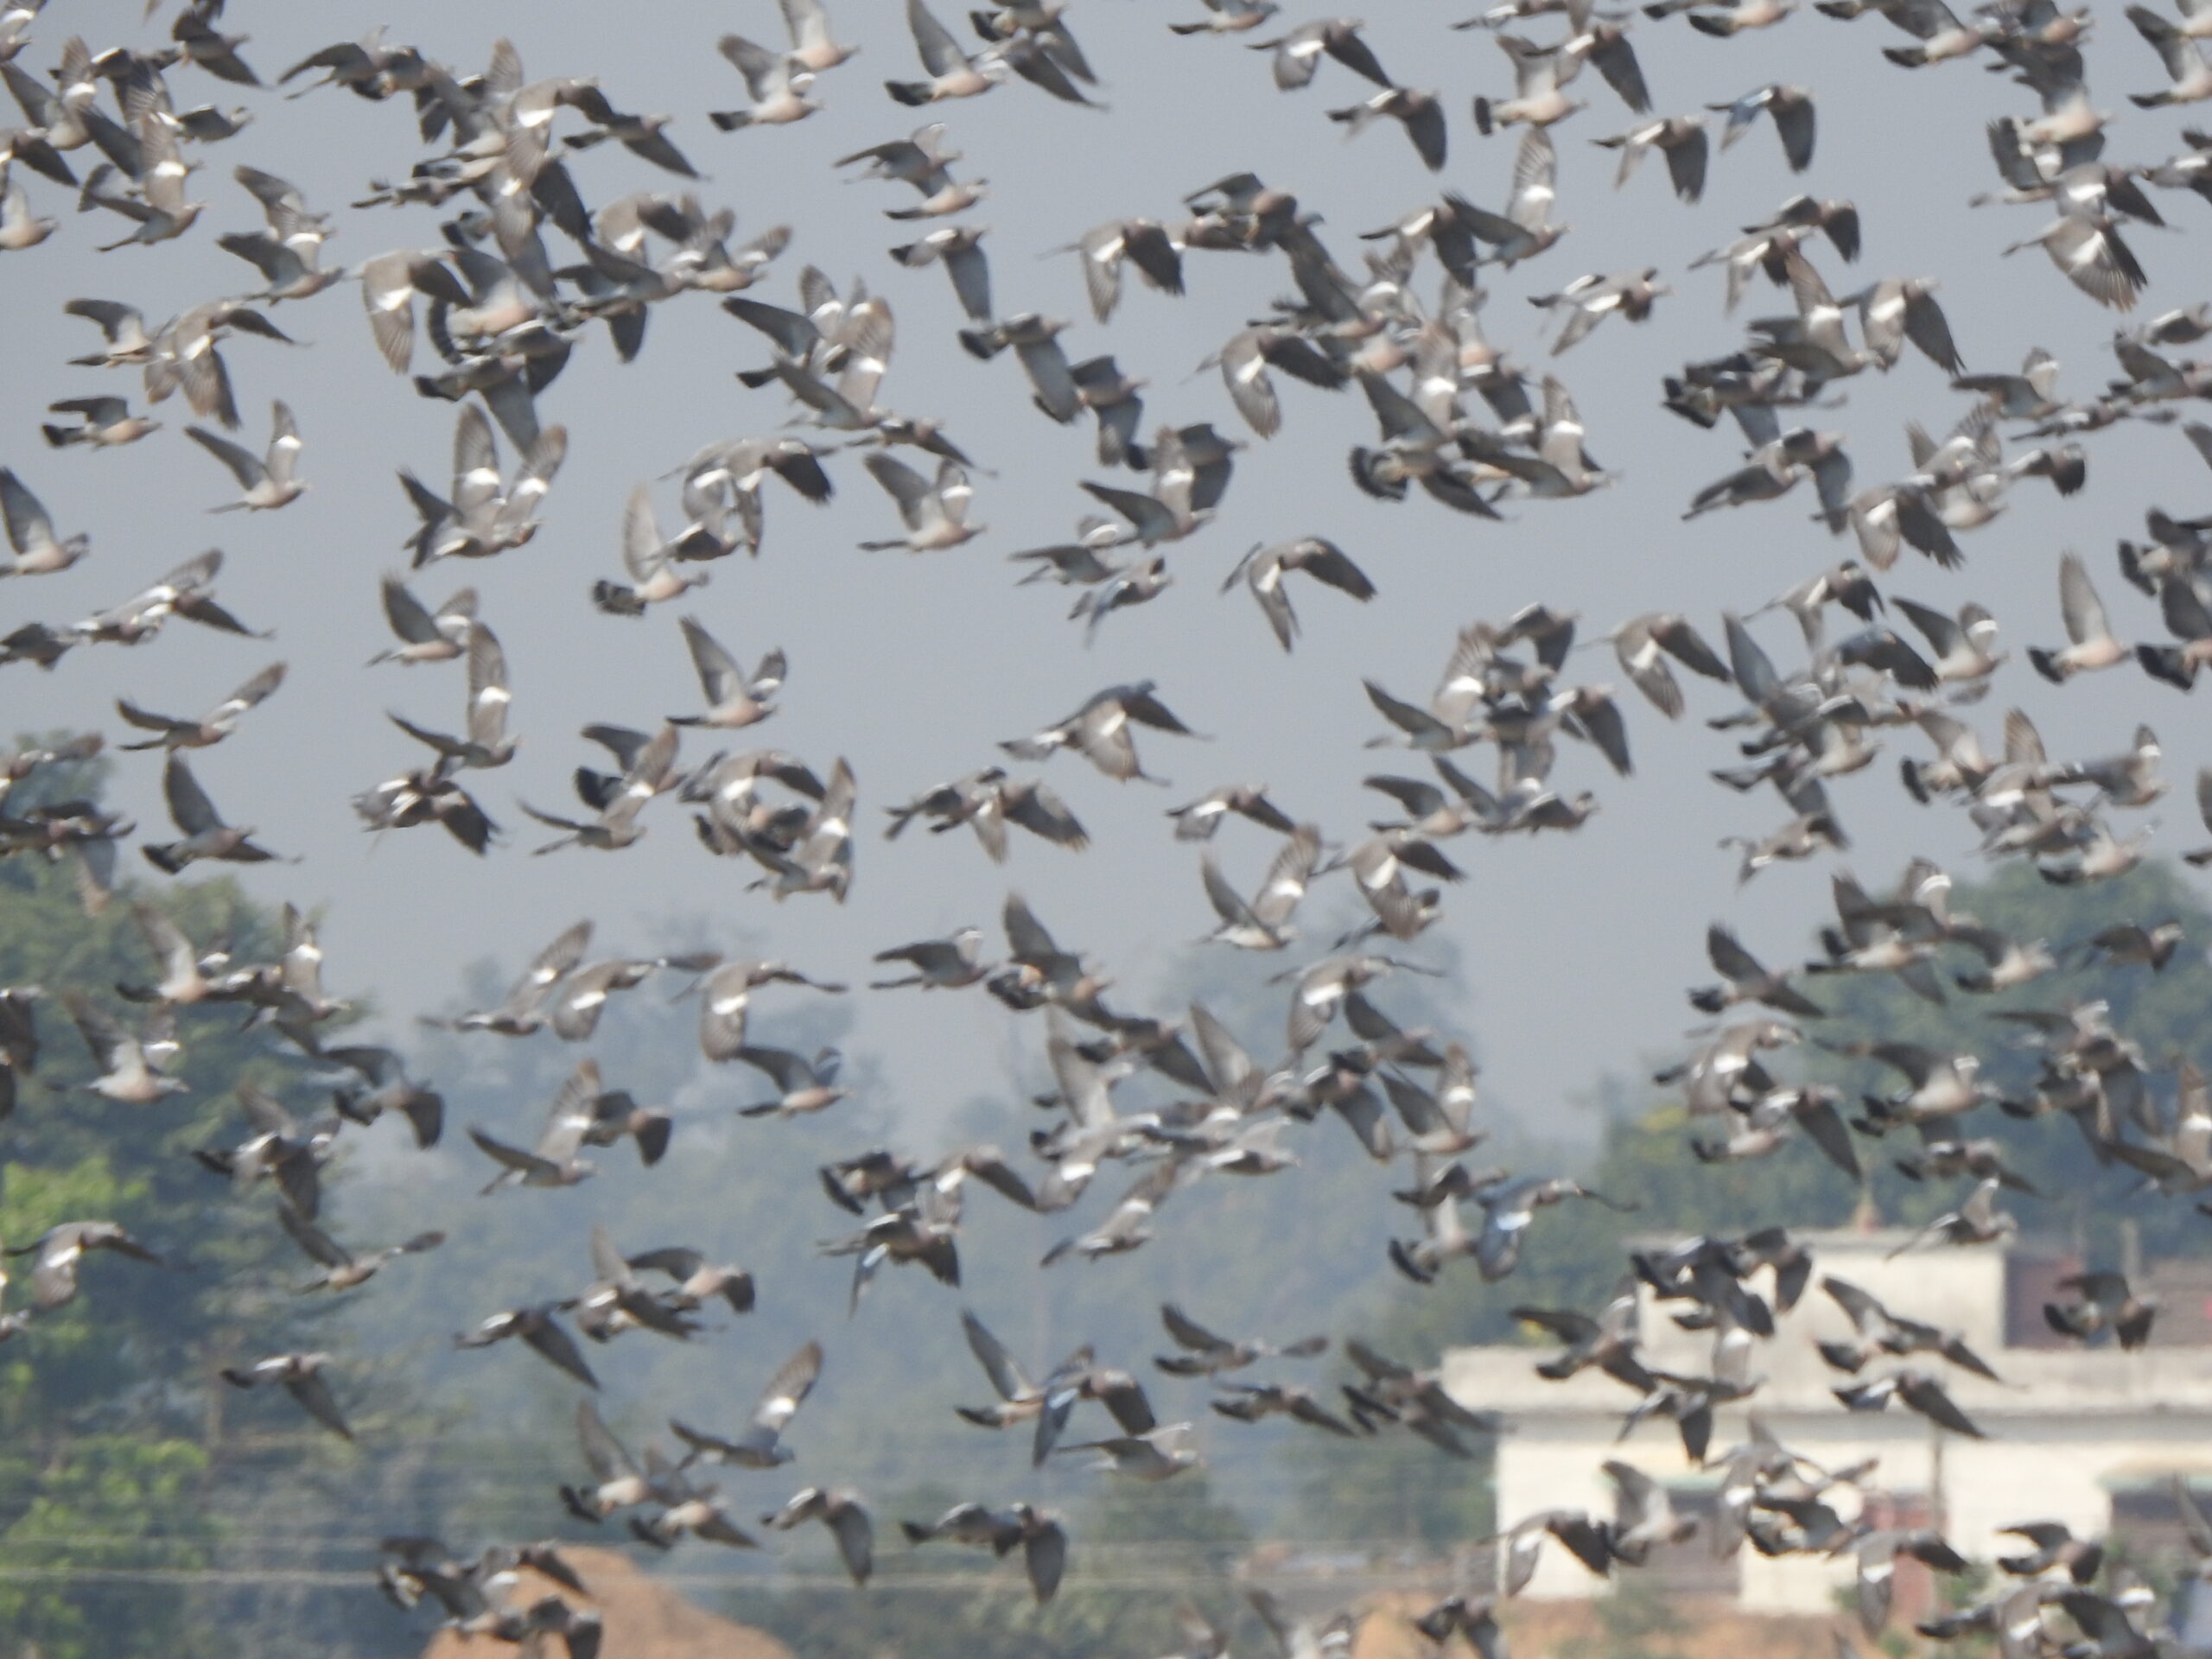 Super flock of pigeons